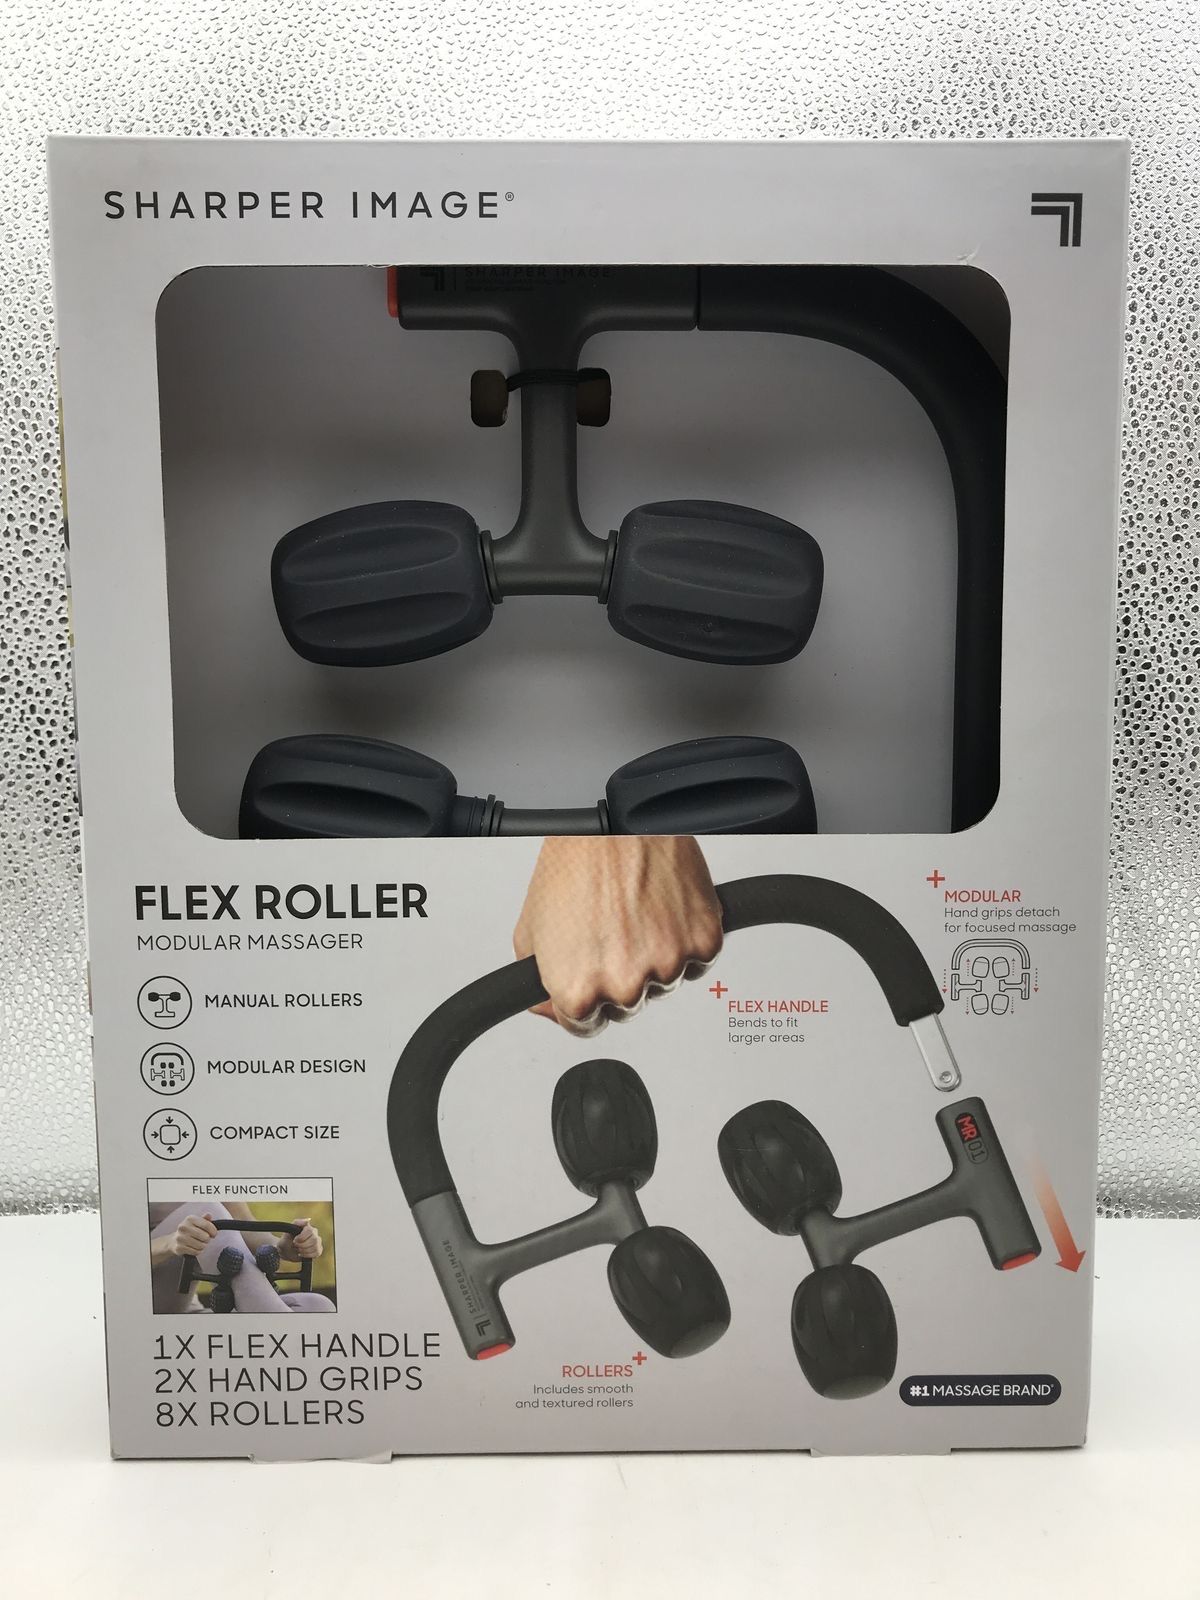 Sharper Image Black Rubber/Plastic Flex Roller Modular Massager